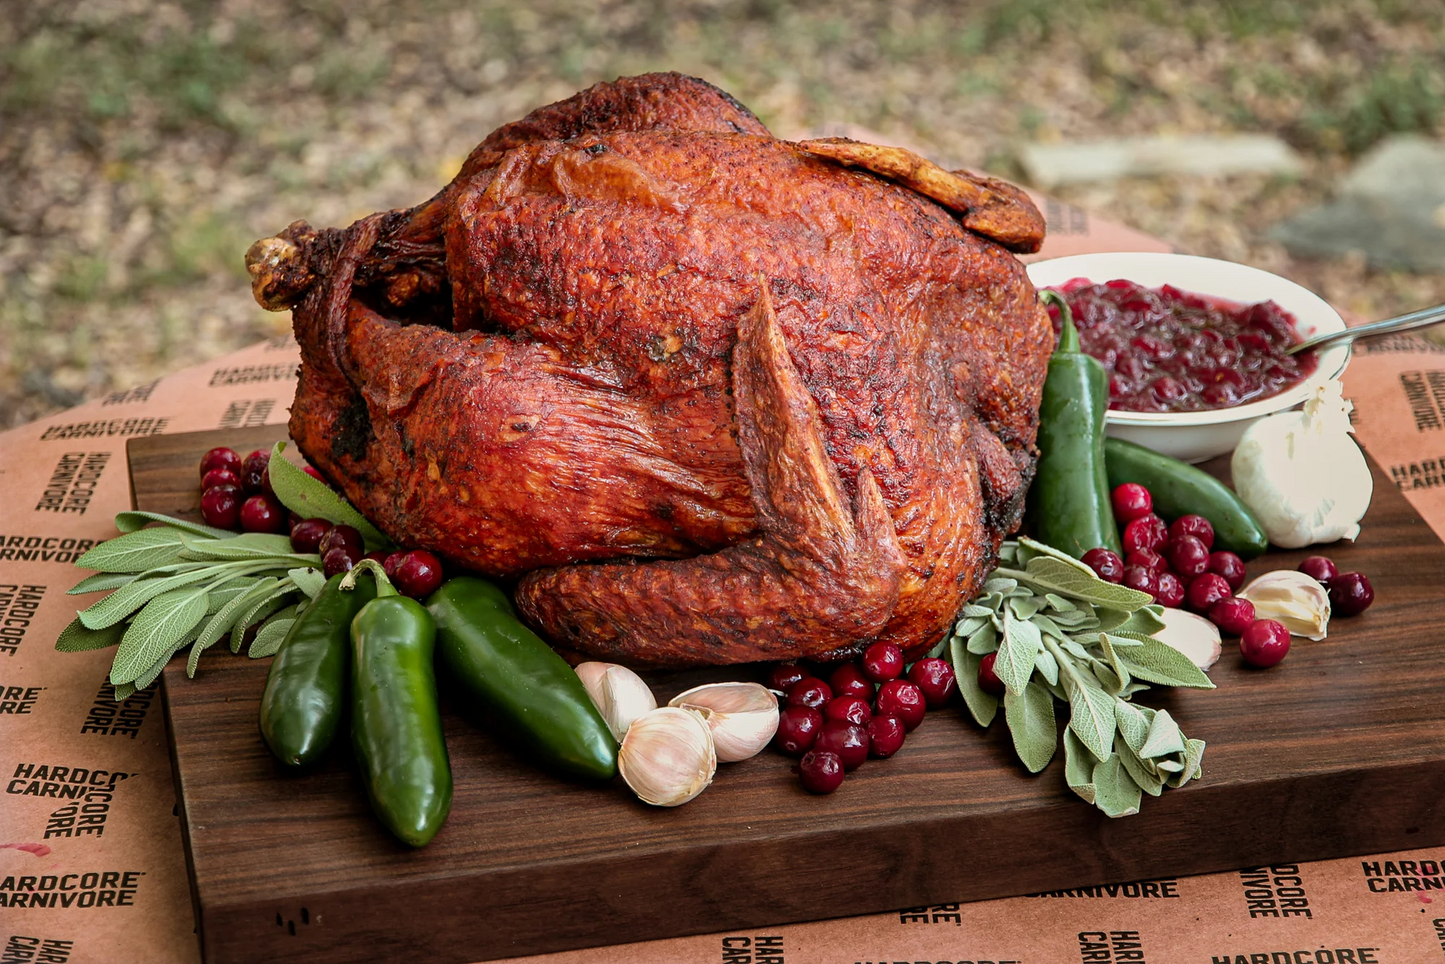 Hardcore Carnivore: Fried Turkey Seasoning